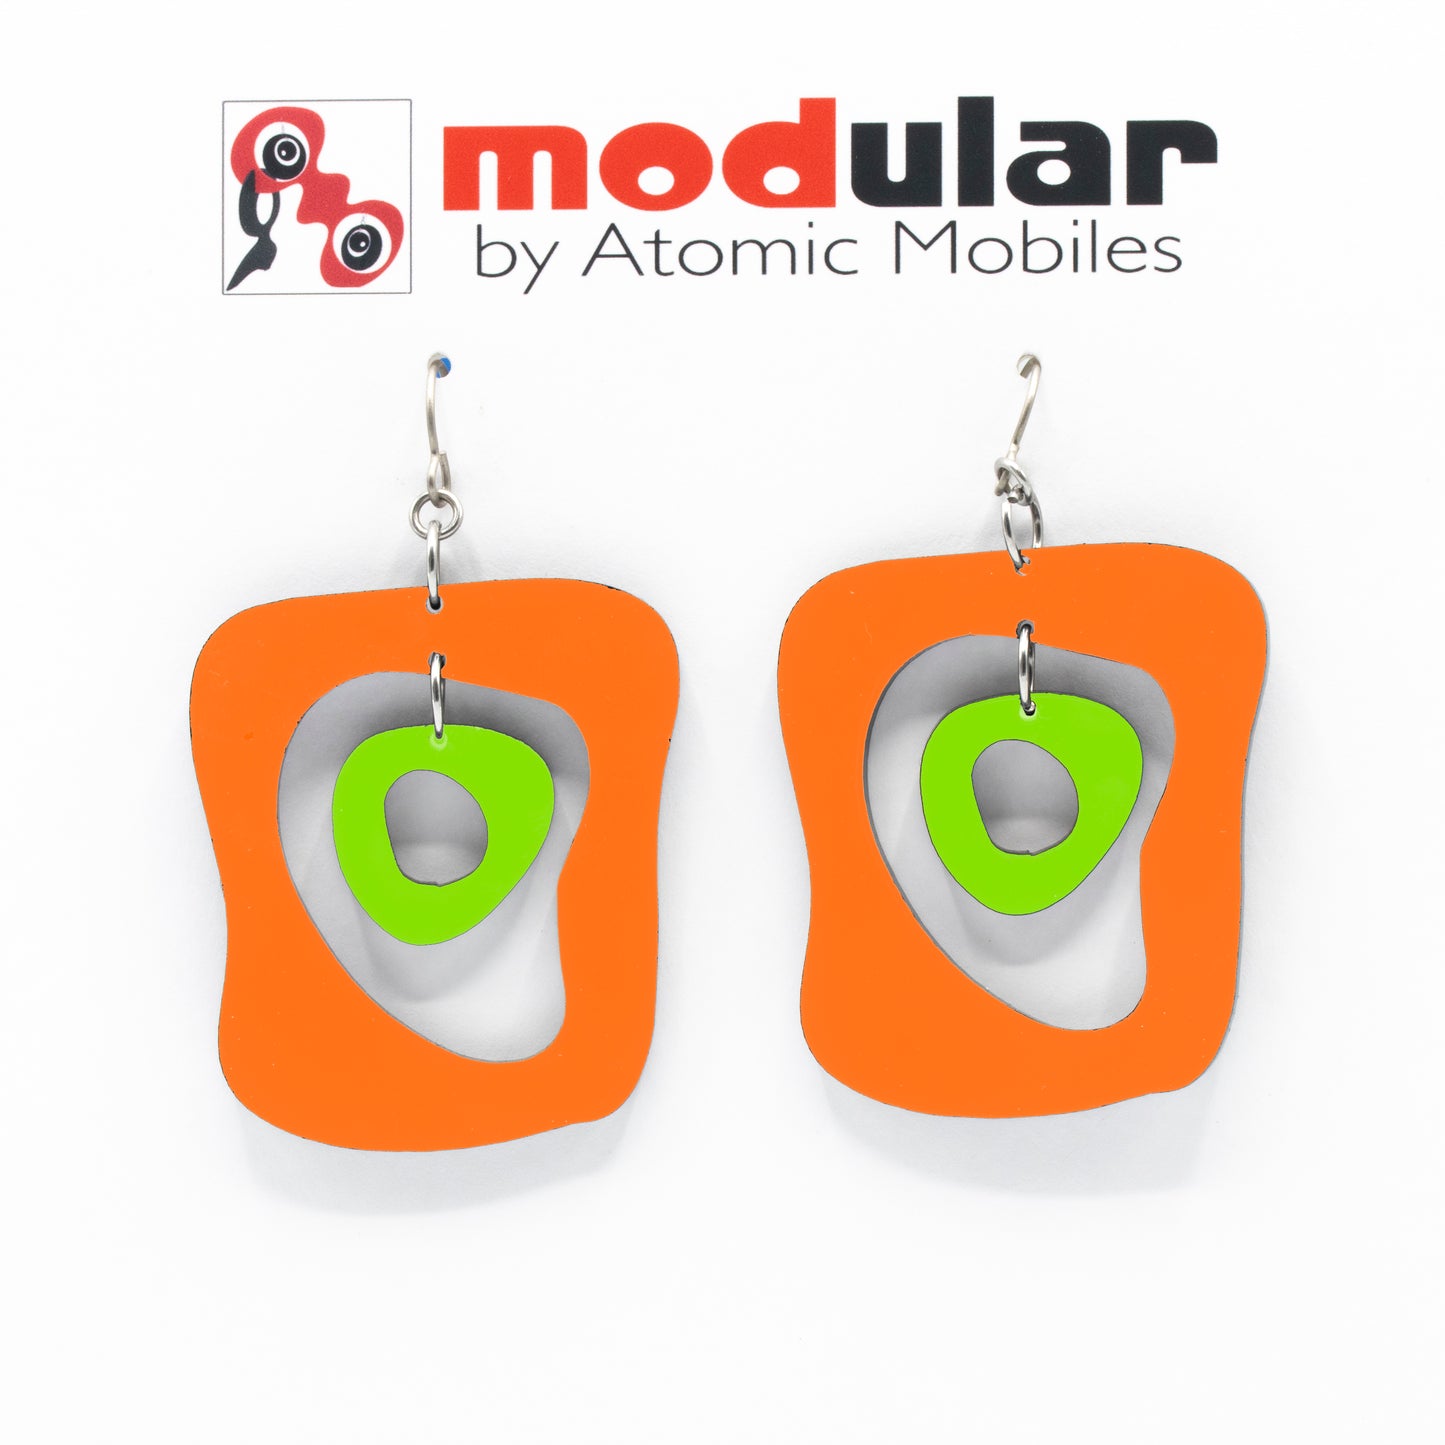 MODular Earrings - Mid Mod Statement Earrings in Orange and Lime by AtomicMobiles.com - mid century inspired modern art dangle earrings